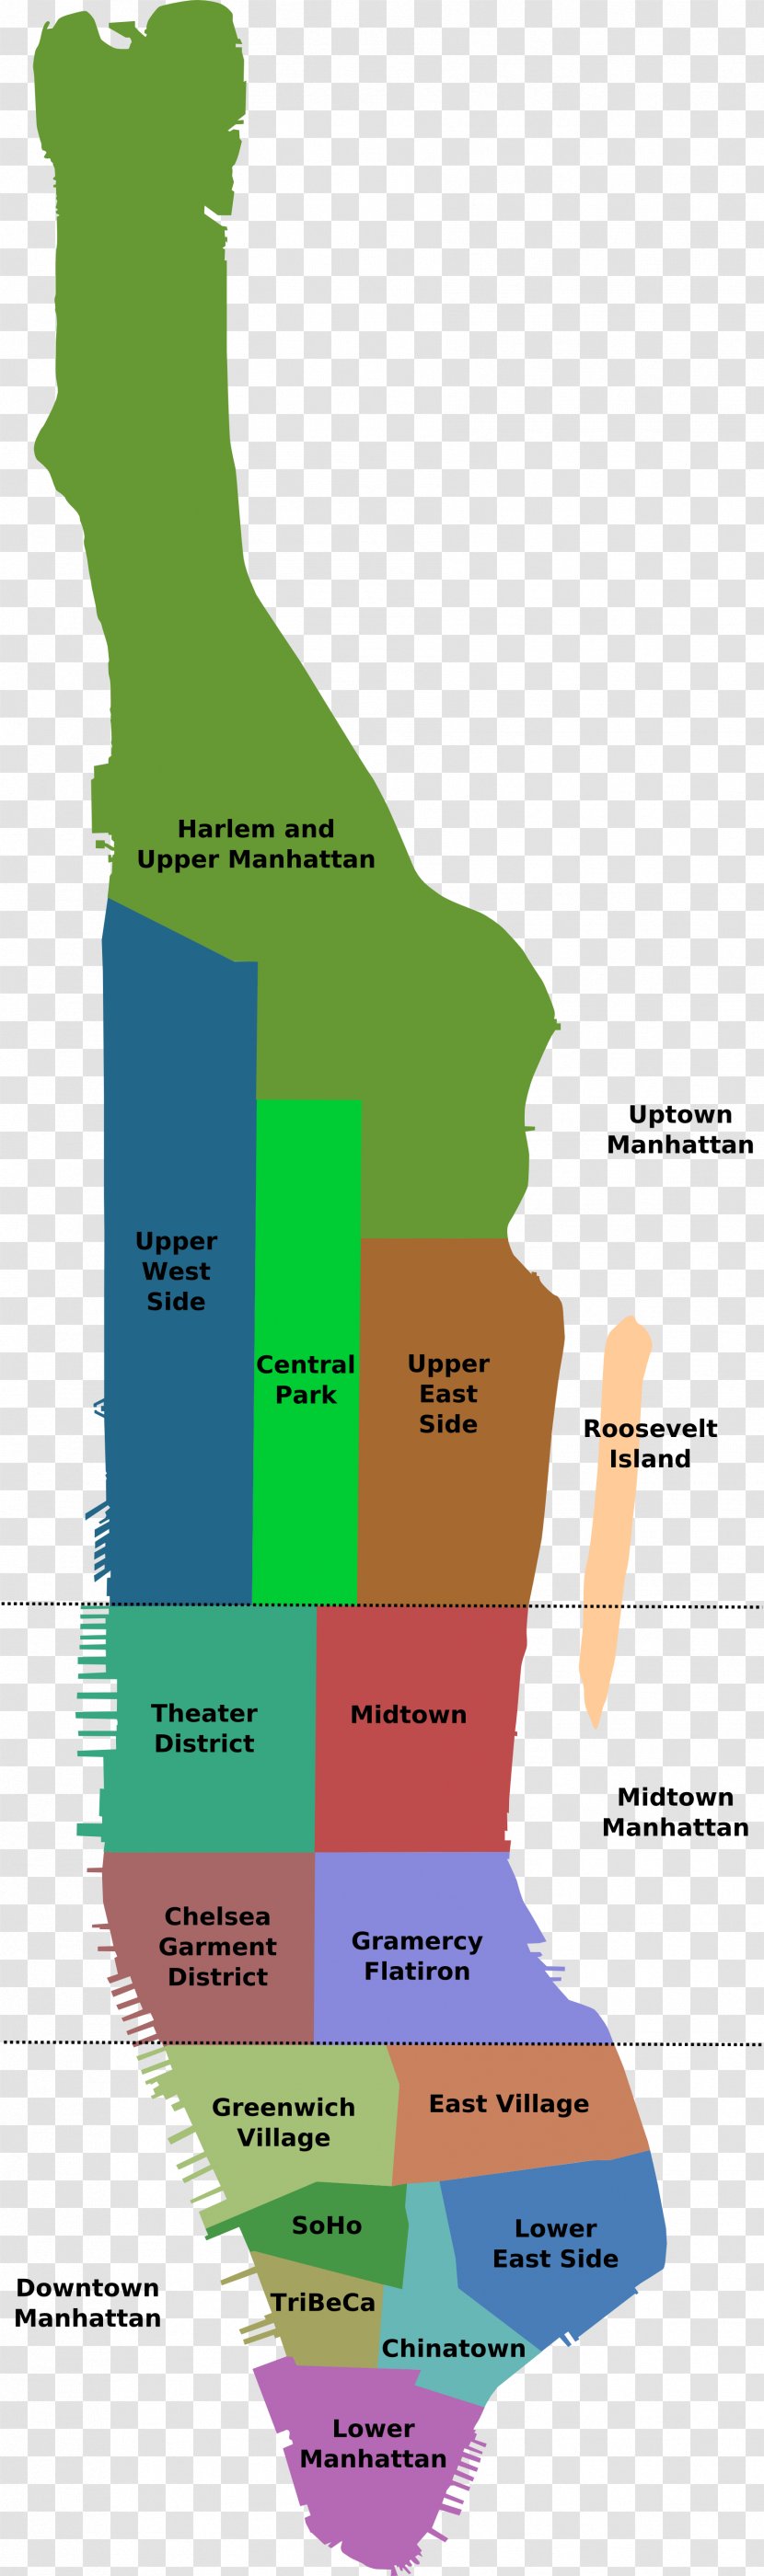 Image Map Manhattan Neighborhood Network District - United States Transparent PNG